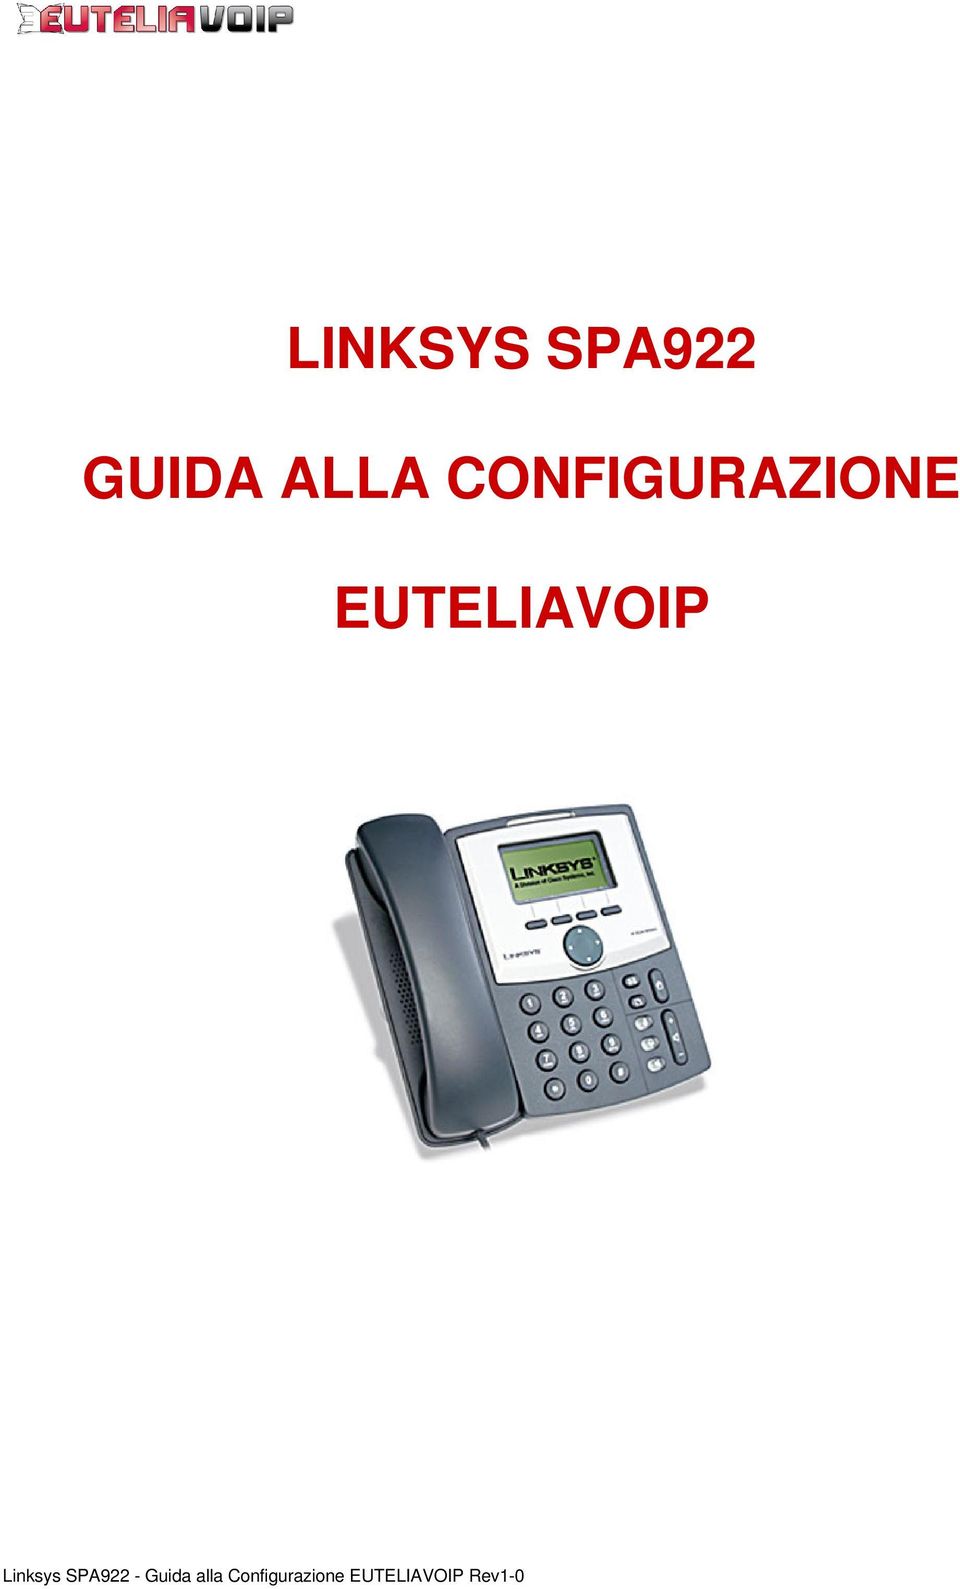 Linksys SPA922 - Guida alla